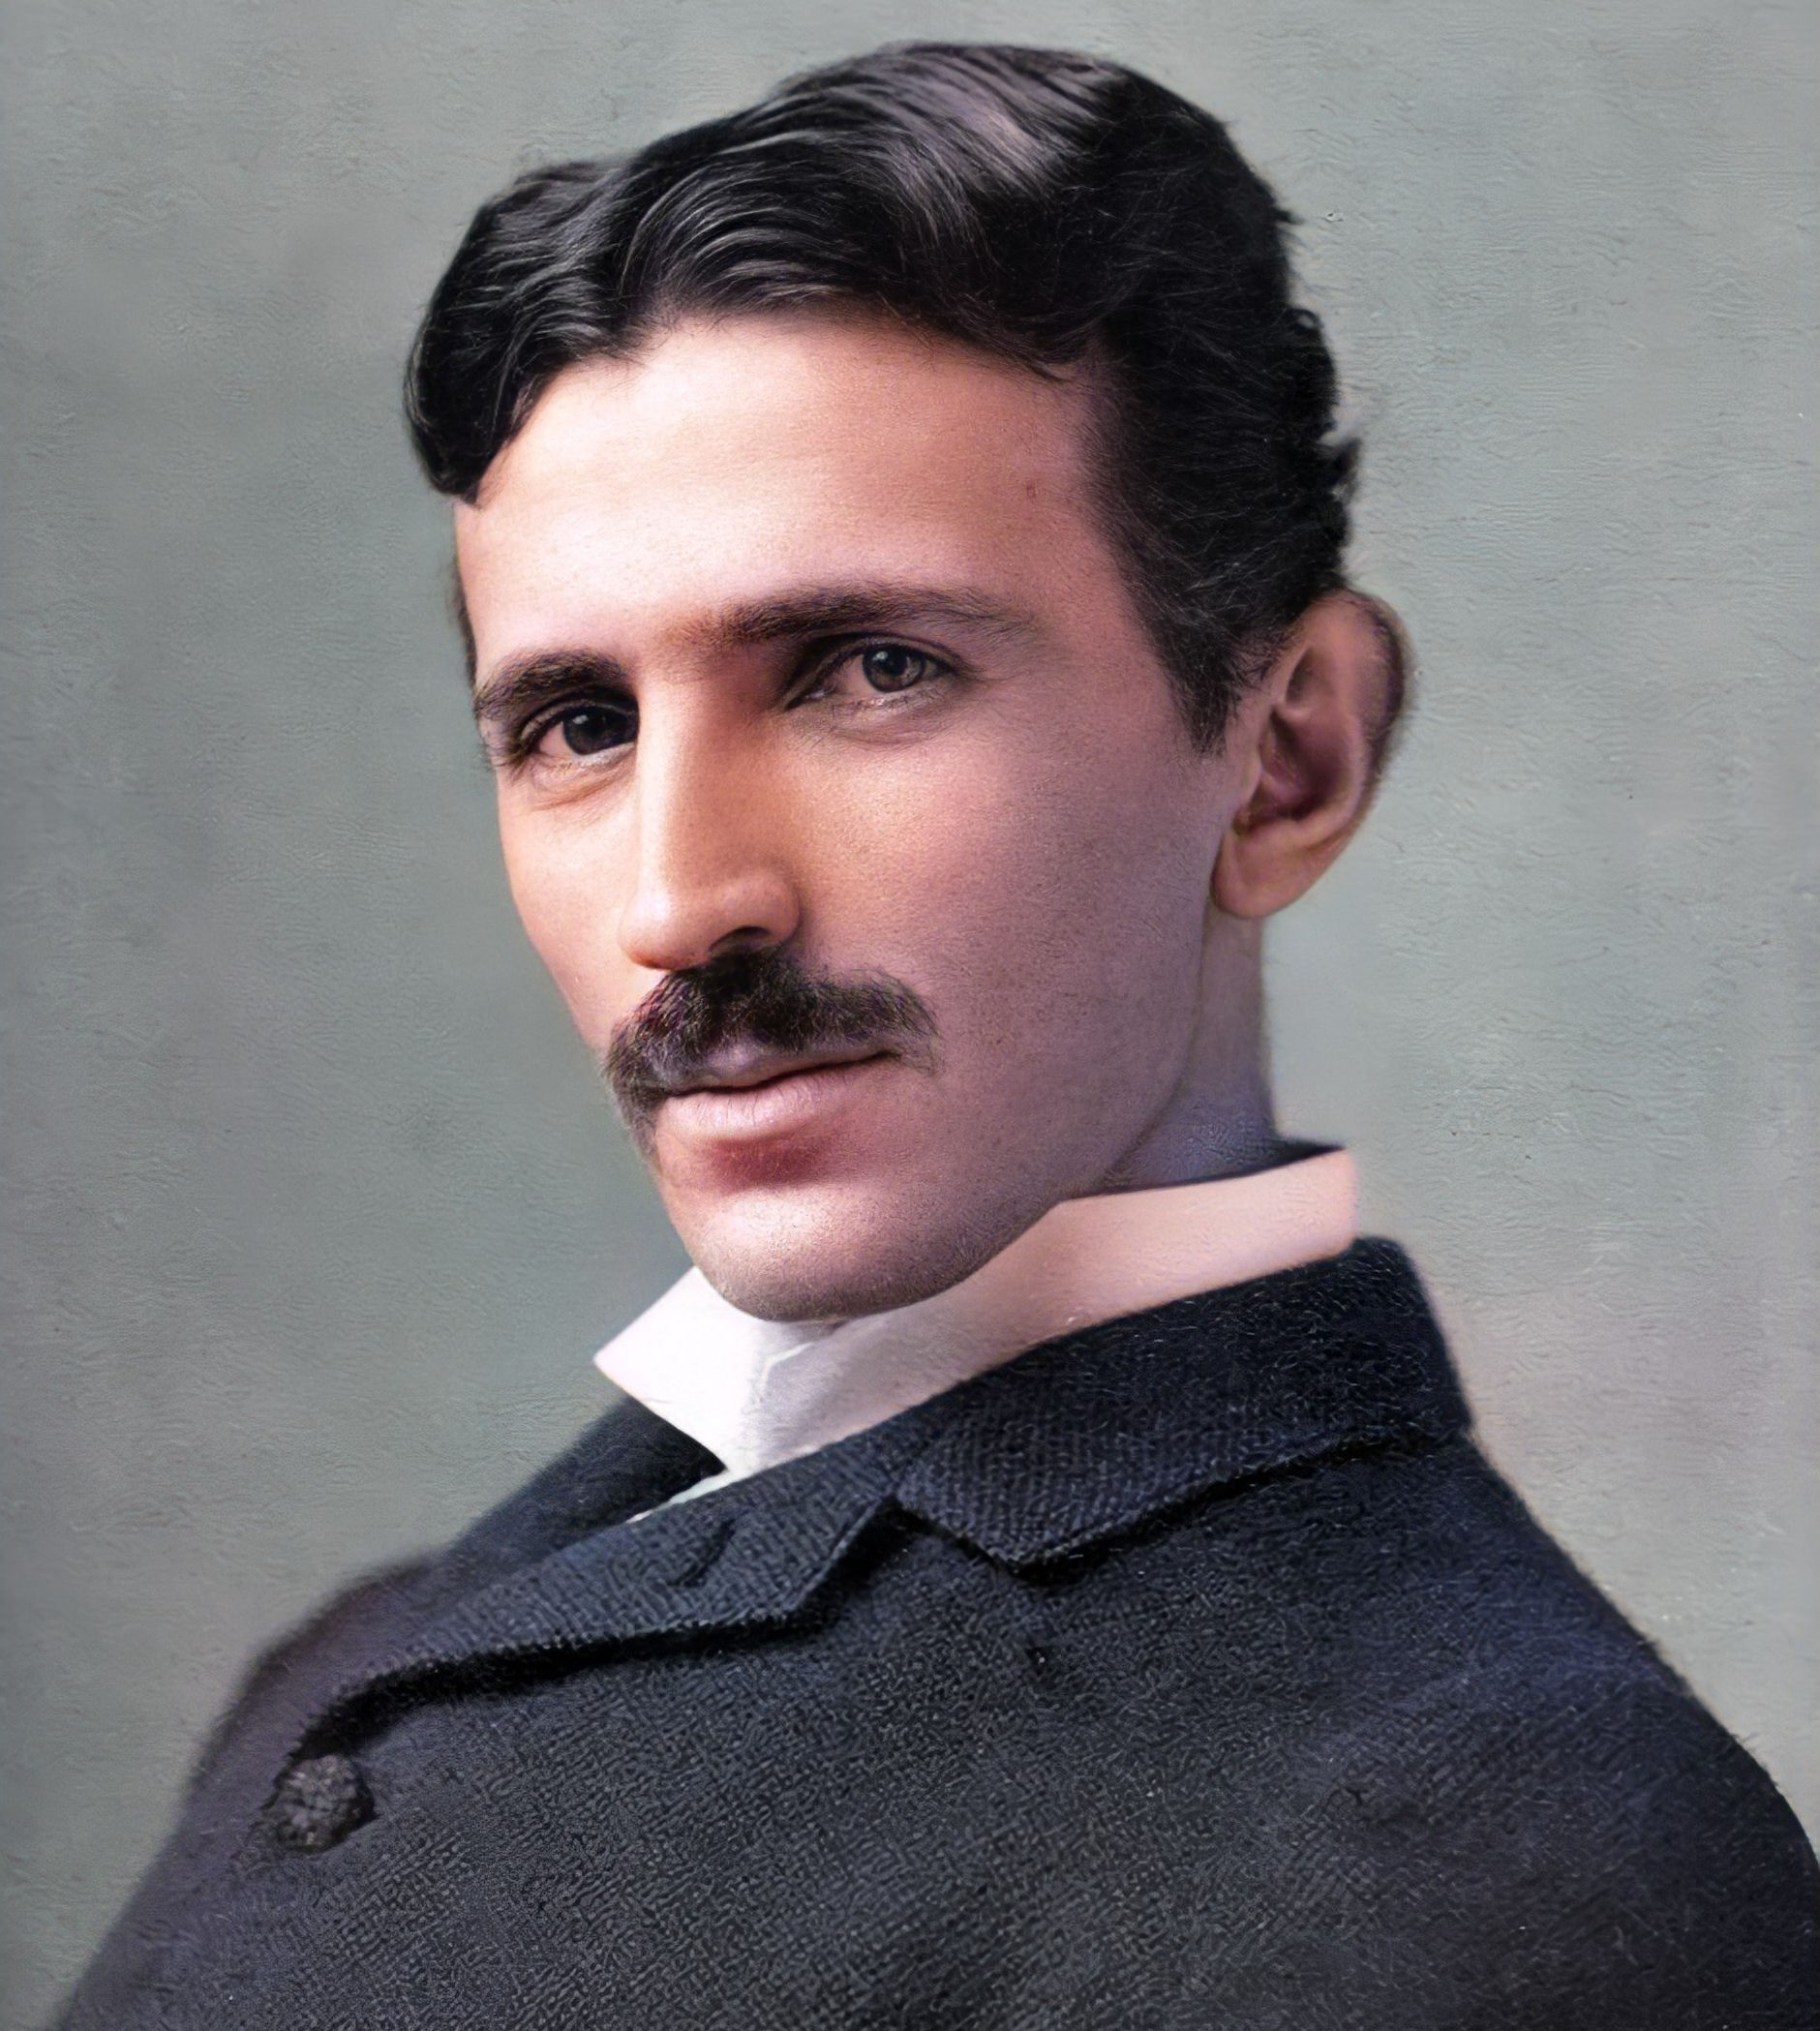 Um vislumbre fascinante das notas de Nikola Tesla no ensino médio e na universidade